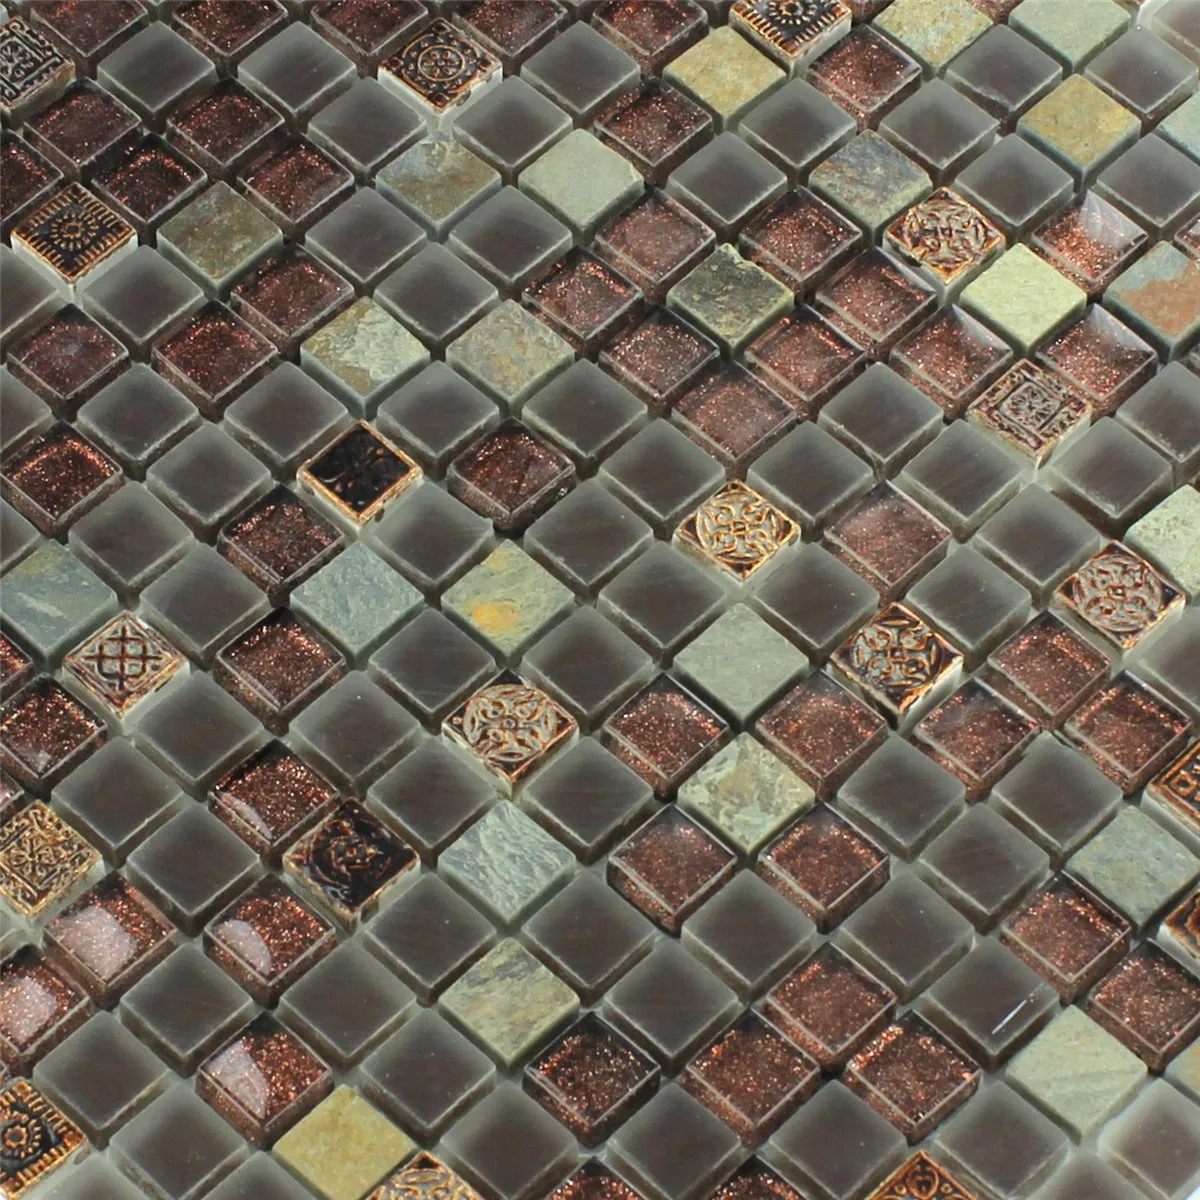 Campione Vetro Calcare Quarzite Mosaico Piastrella Luccichio